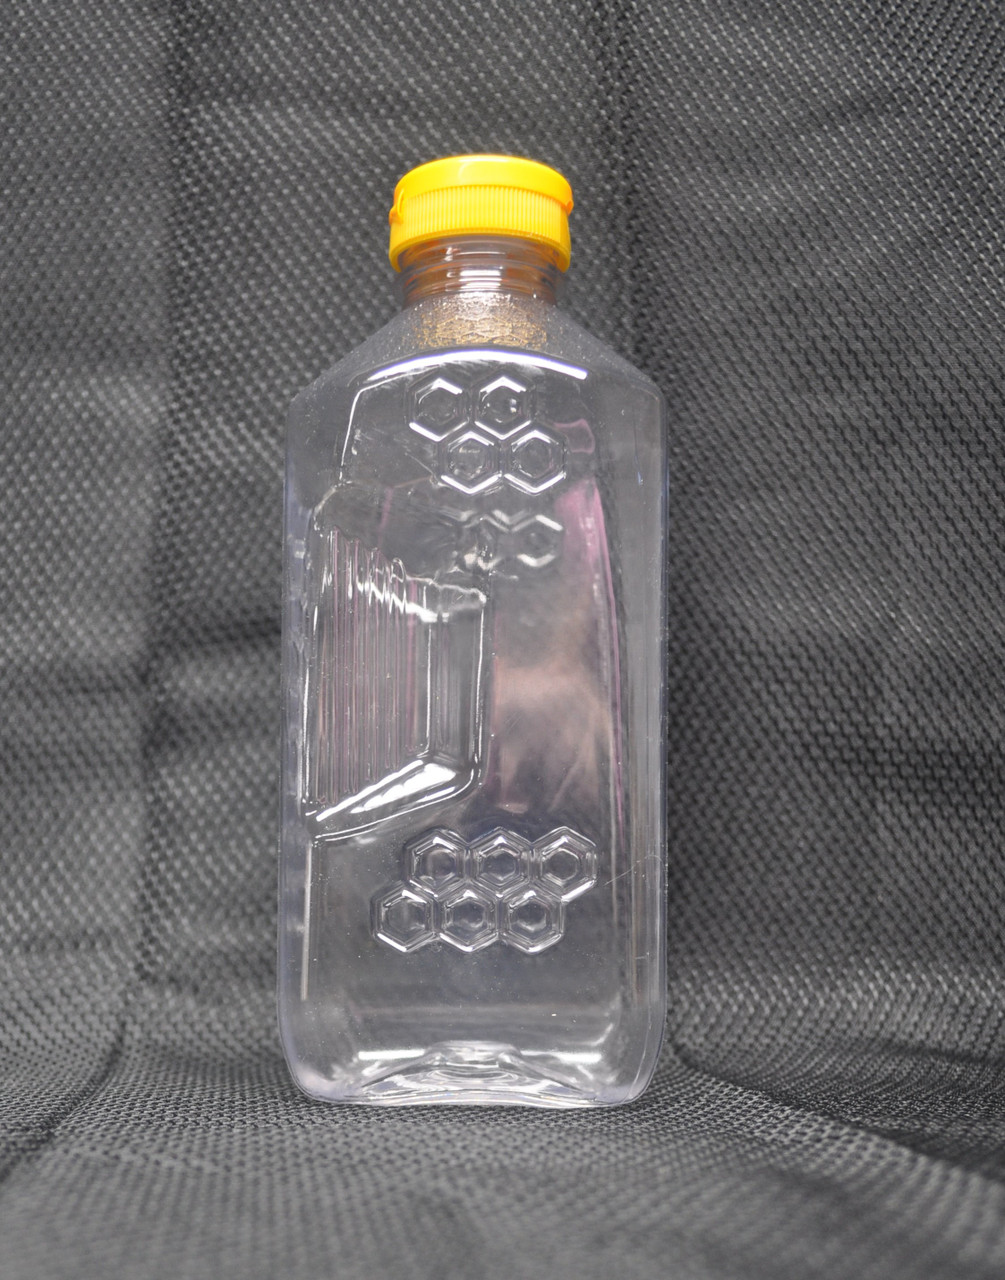 3 lb. honeycomb pattern honey bottle with flip-top cap side detail